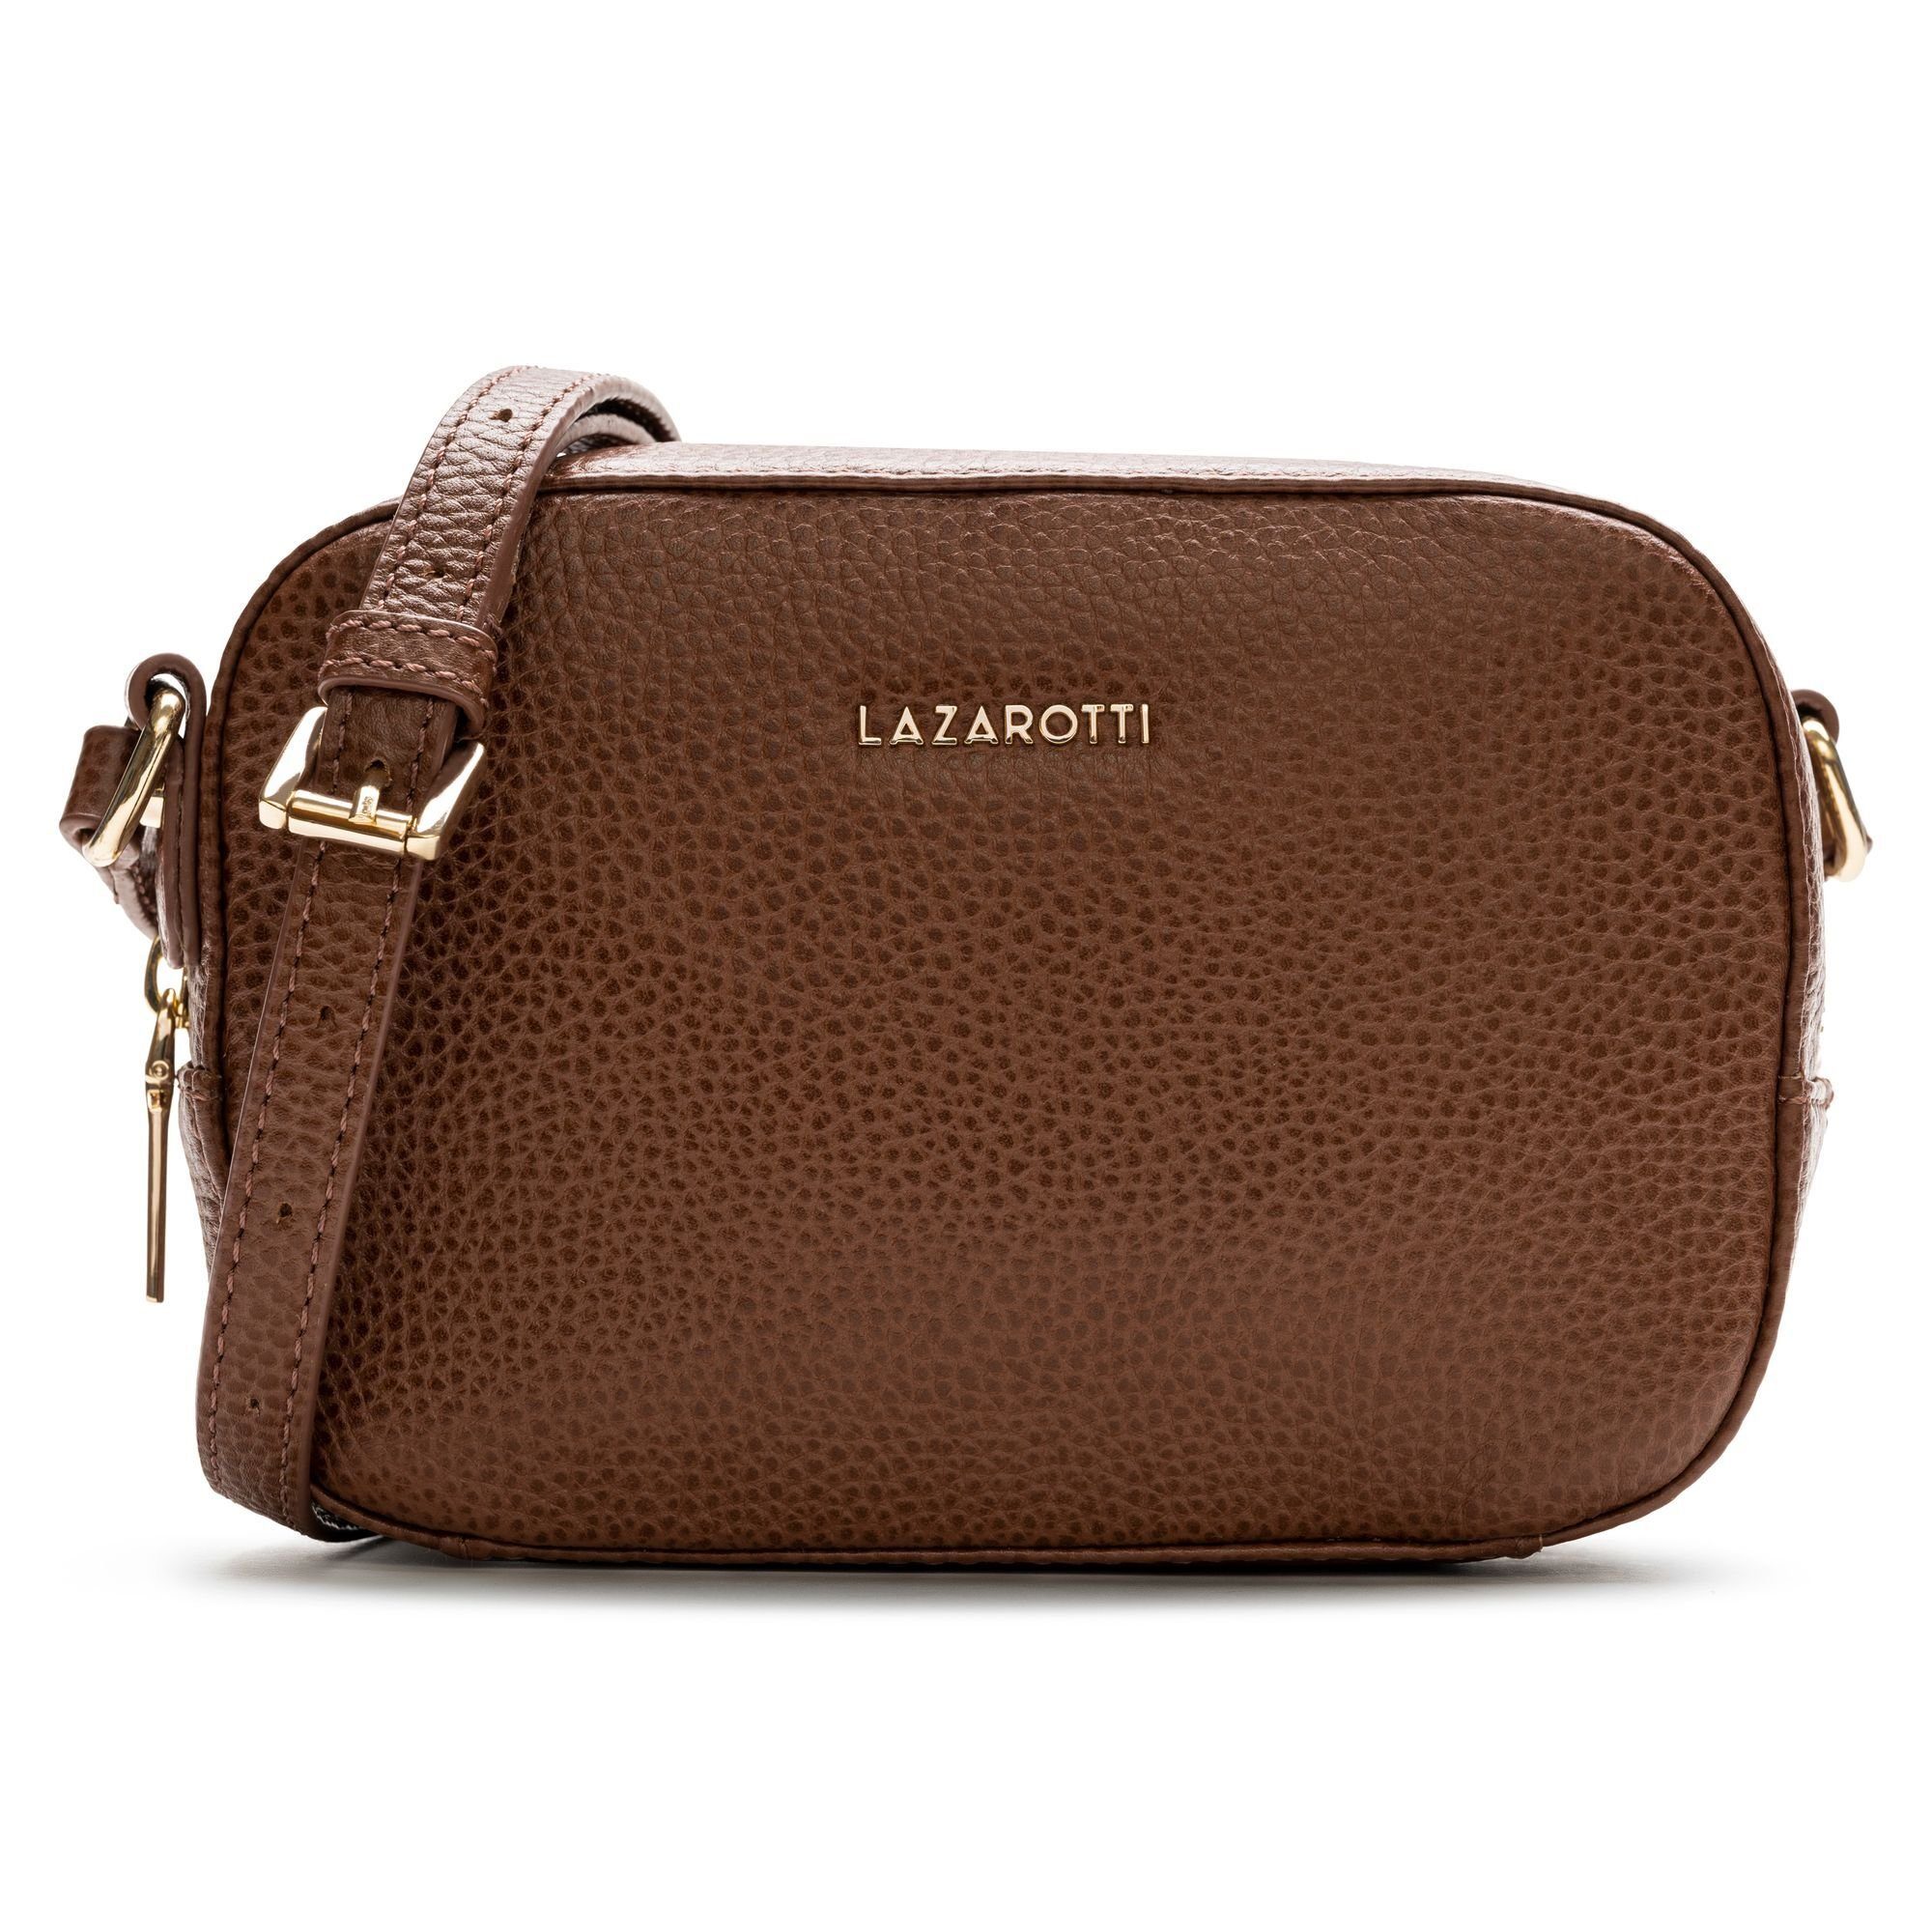 Lazarotti Umhängetasche Leather, Bologna brown Leder